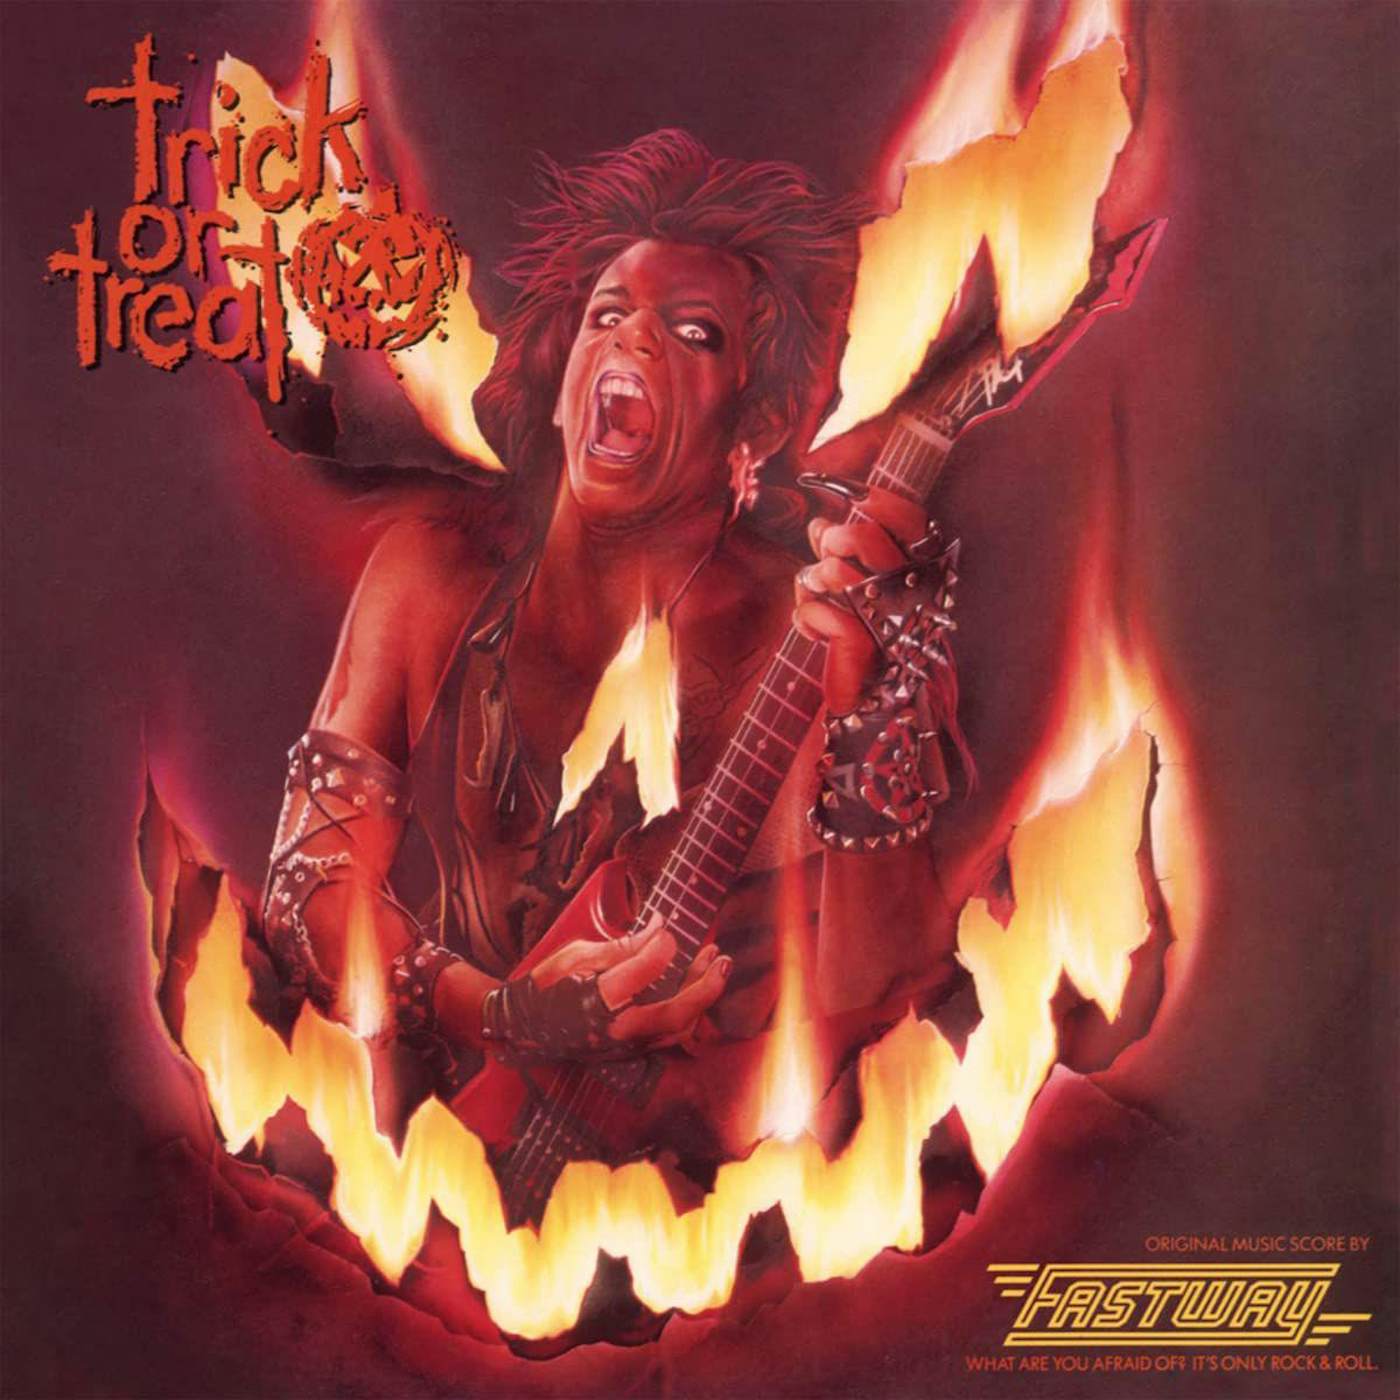 Fastway Trick Or Treat / Original Soundtrack (Flaming Orange) Vinyl Record